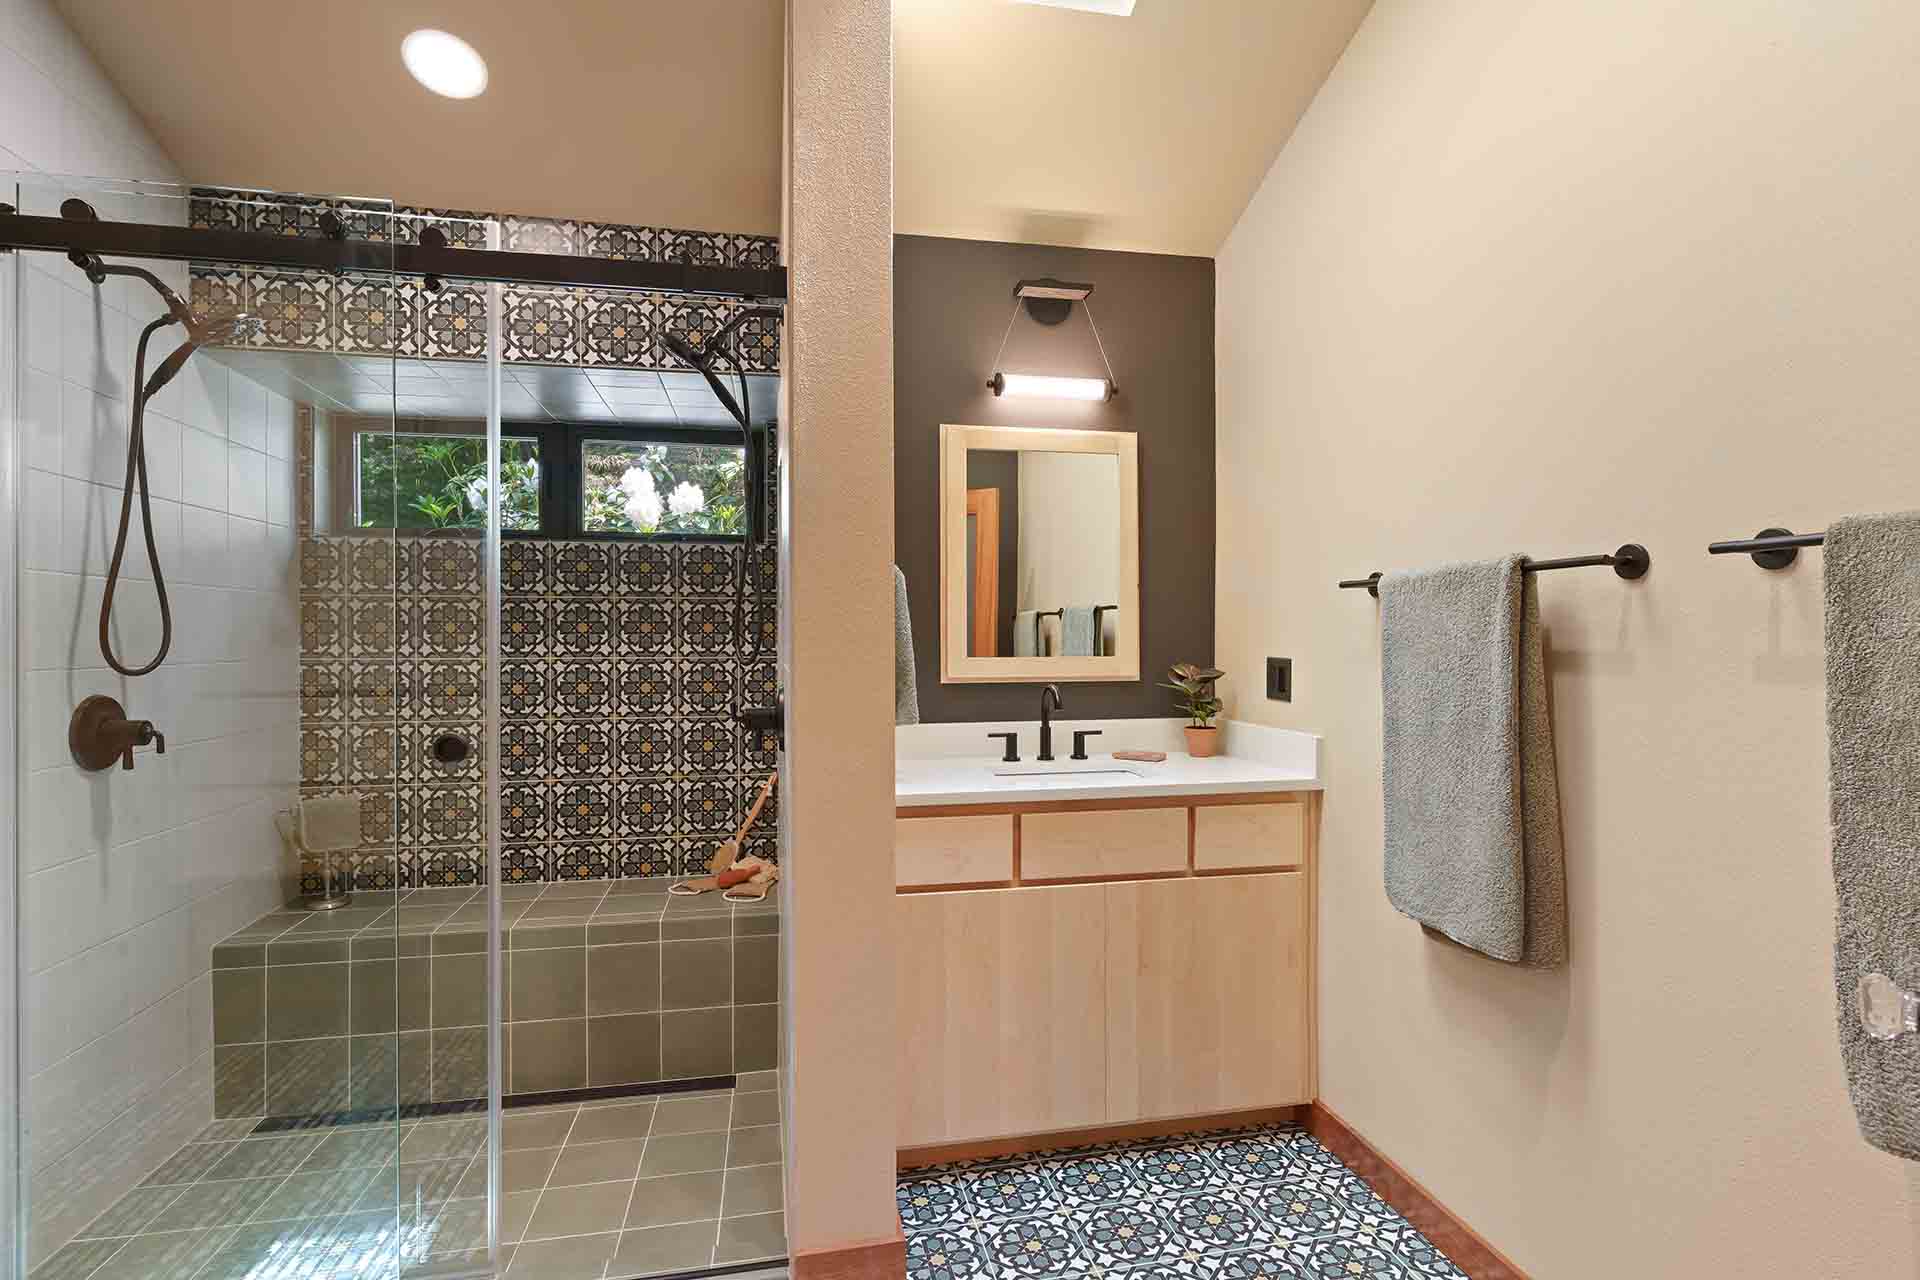 shower and one bathroom vanity